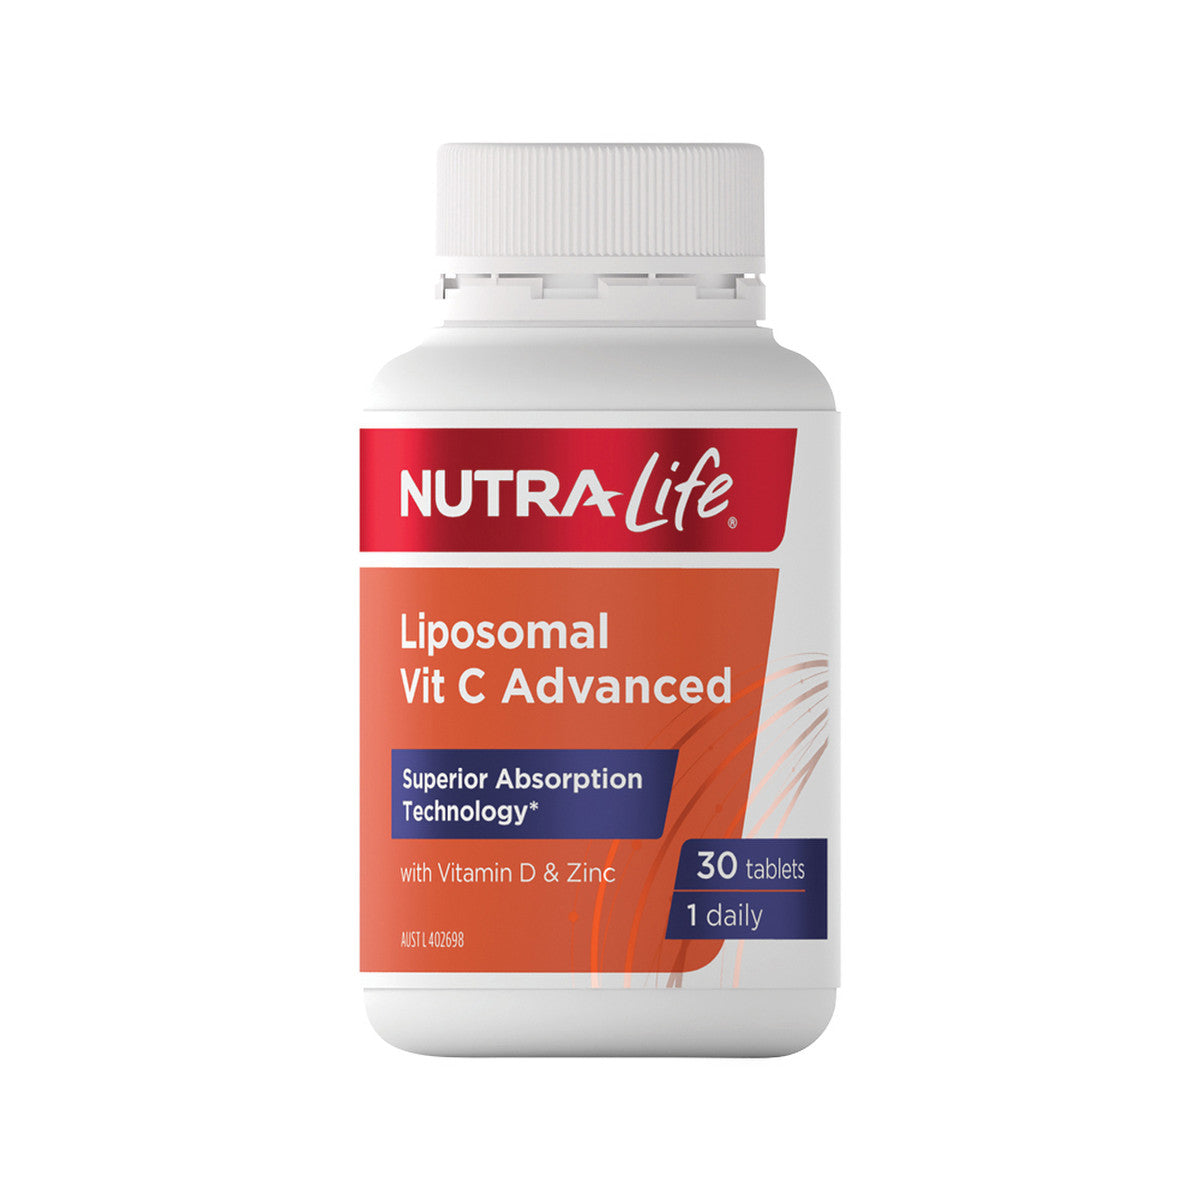 NutraLife - Liposomal Vit C Advanced with Vitamin D & Zinc